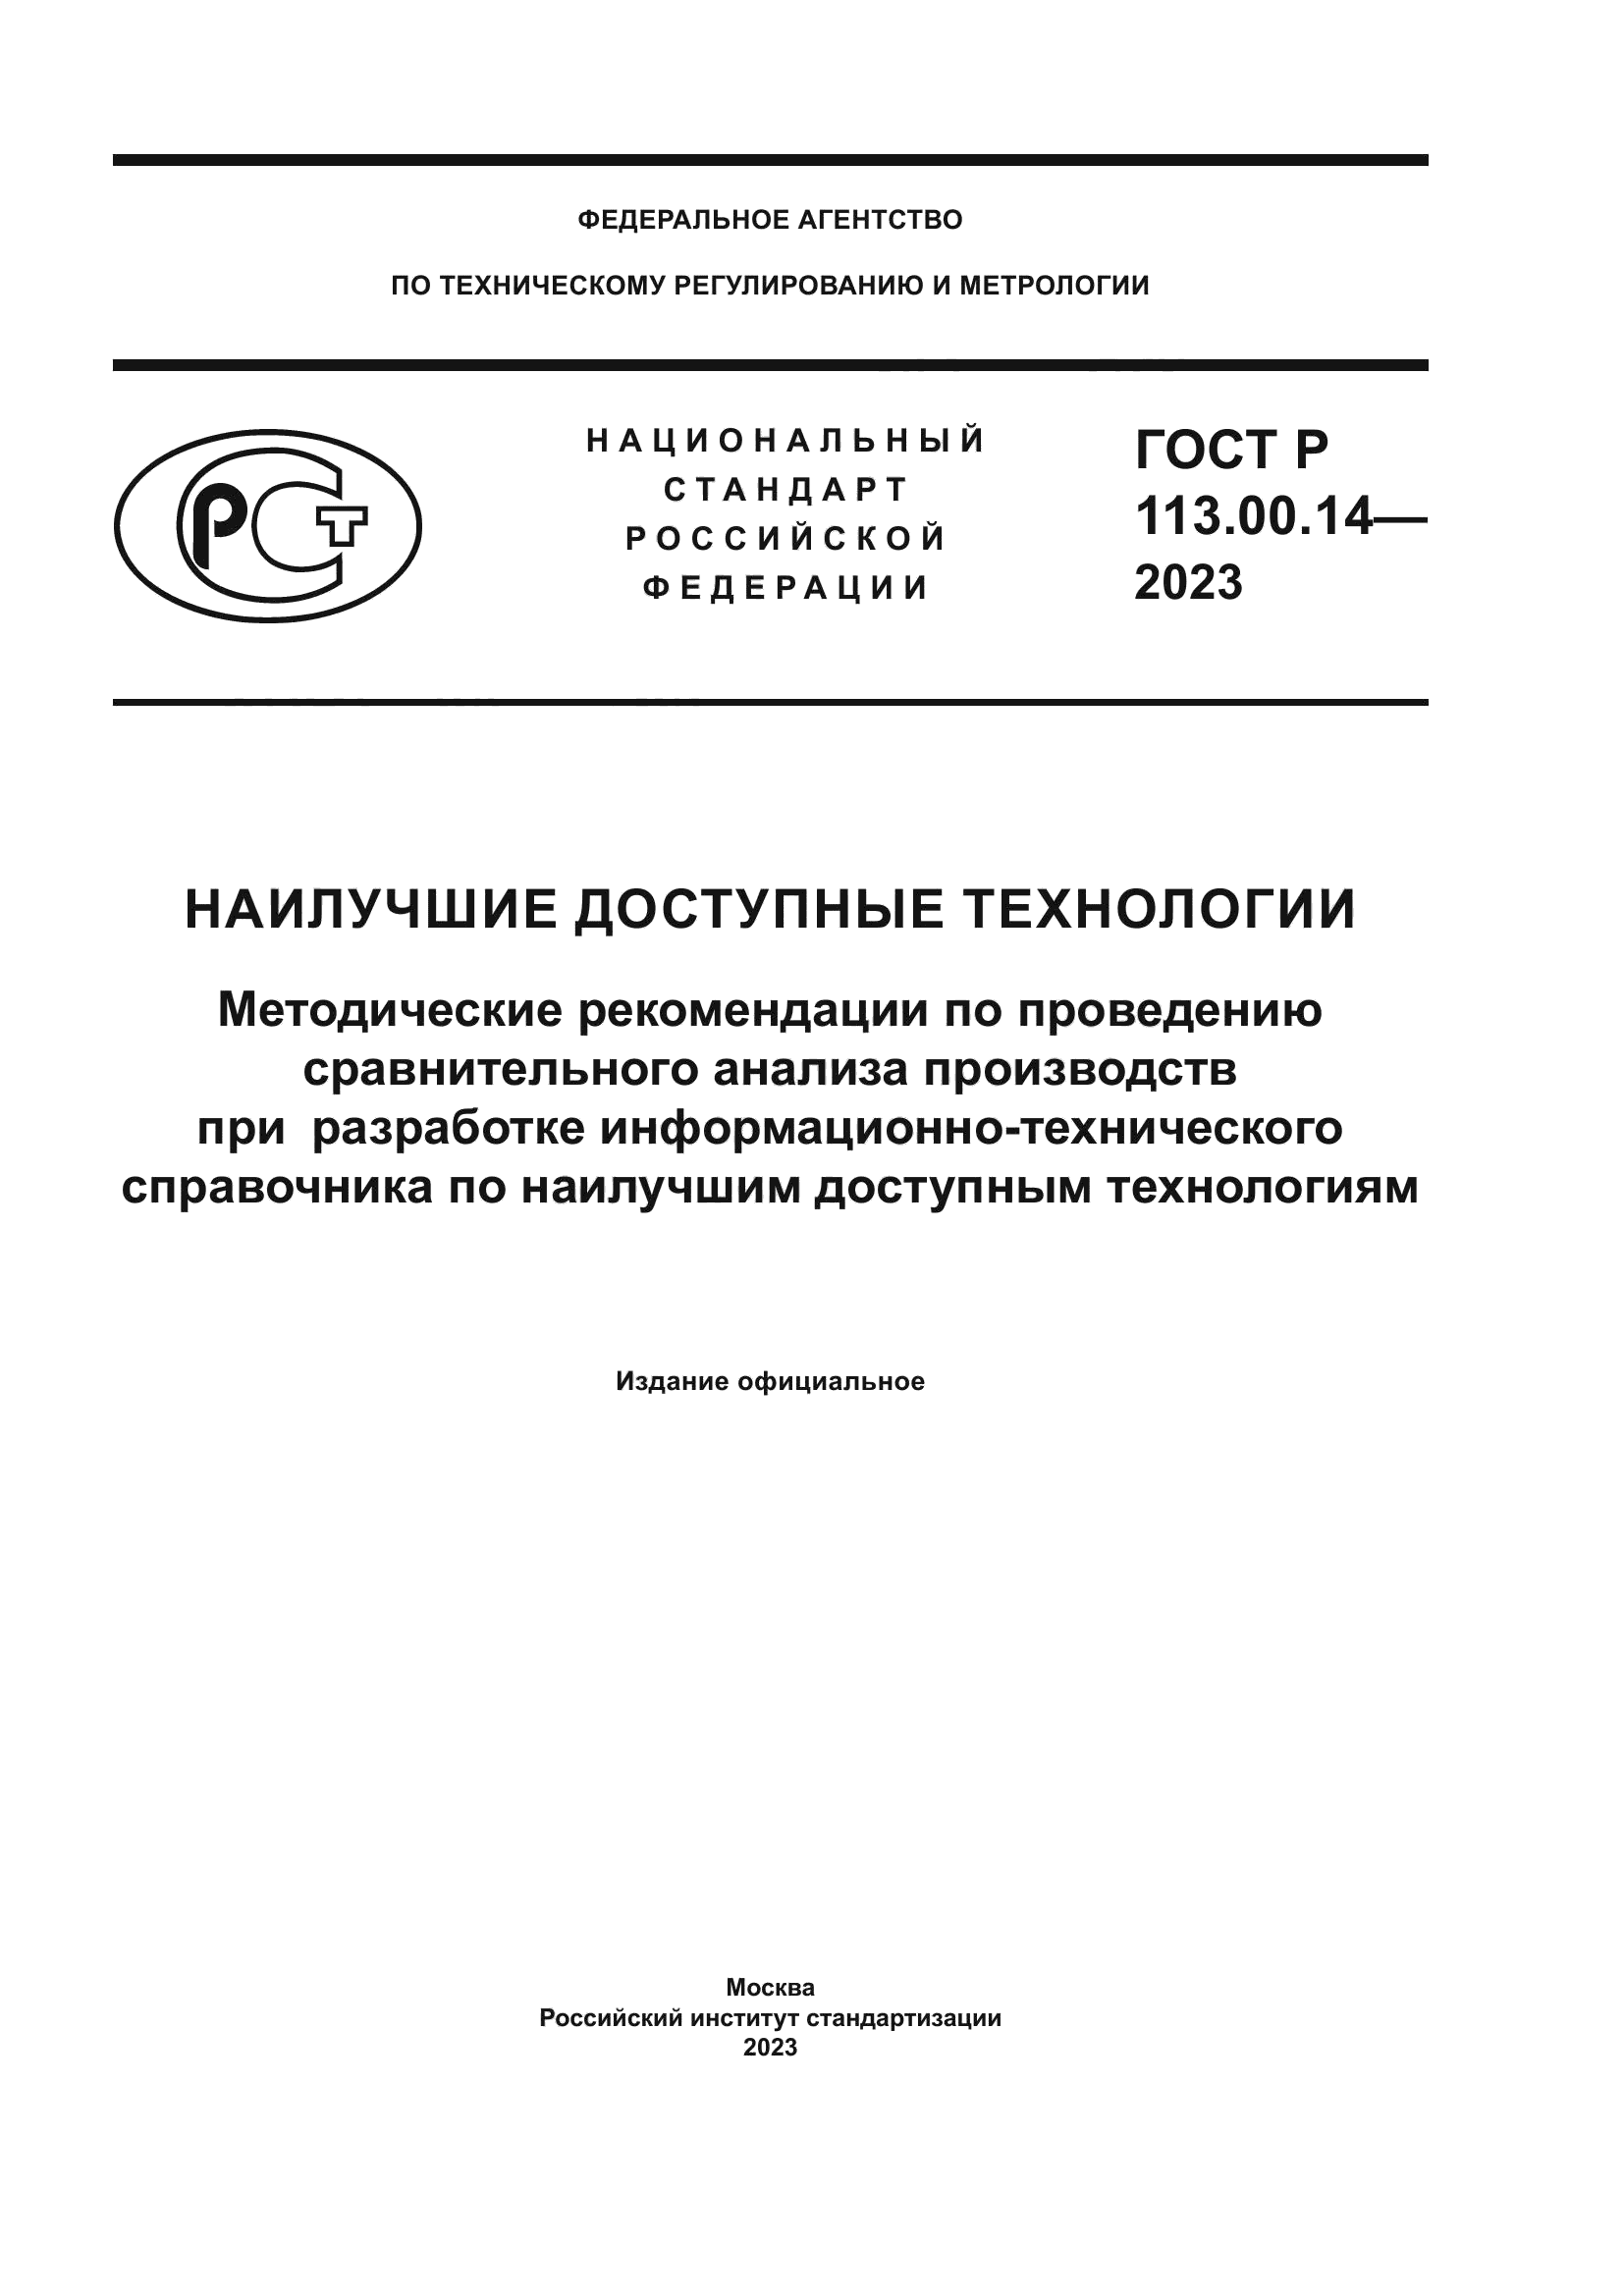 ГОСТ Р 113.00.14-2023